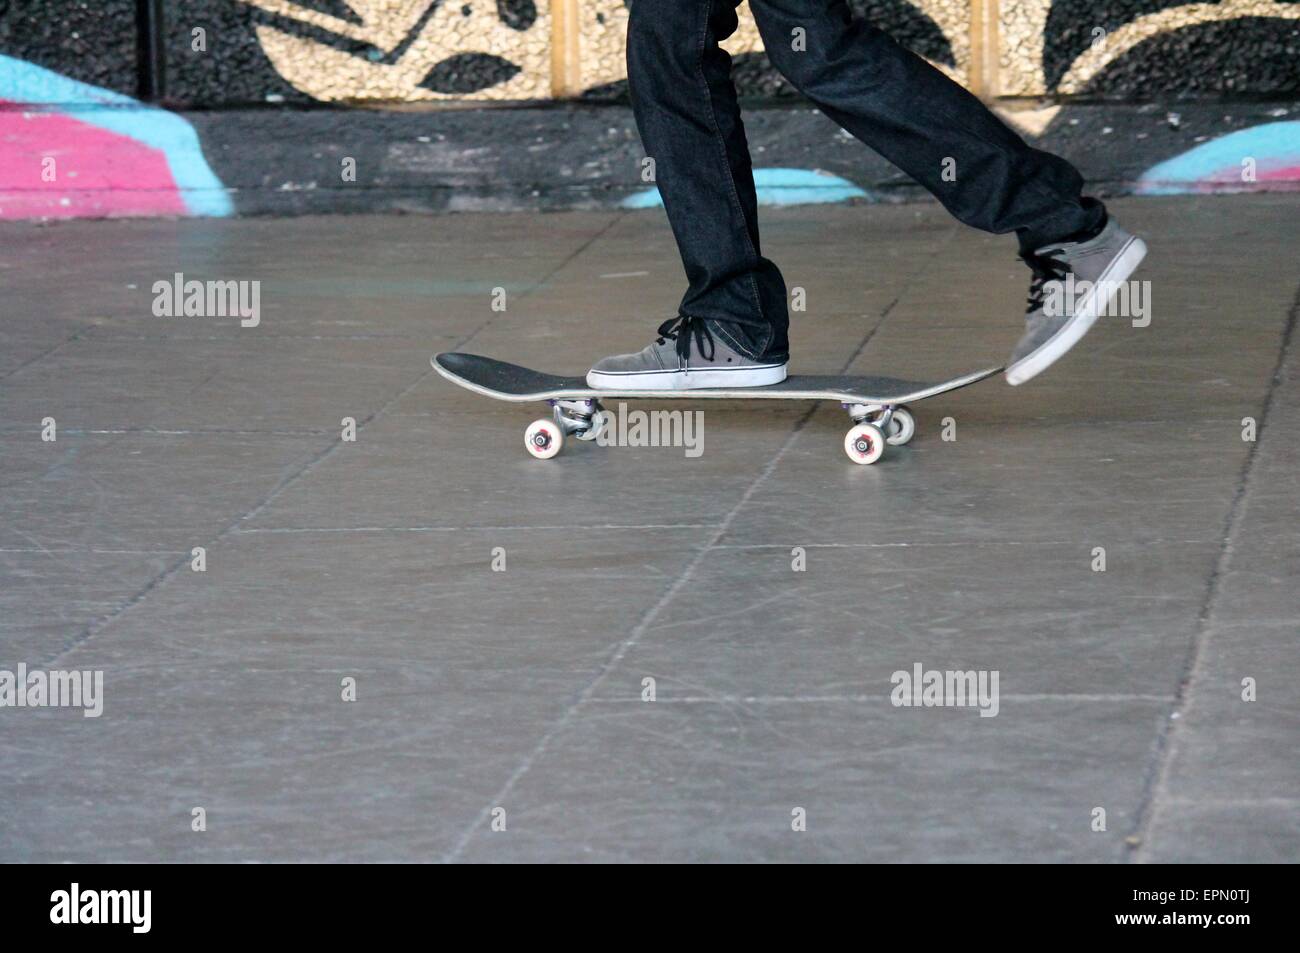 Skate park graffiti fotografías e imágenes de alta resolución - Página 6 -  Alamy